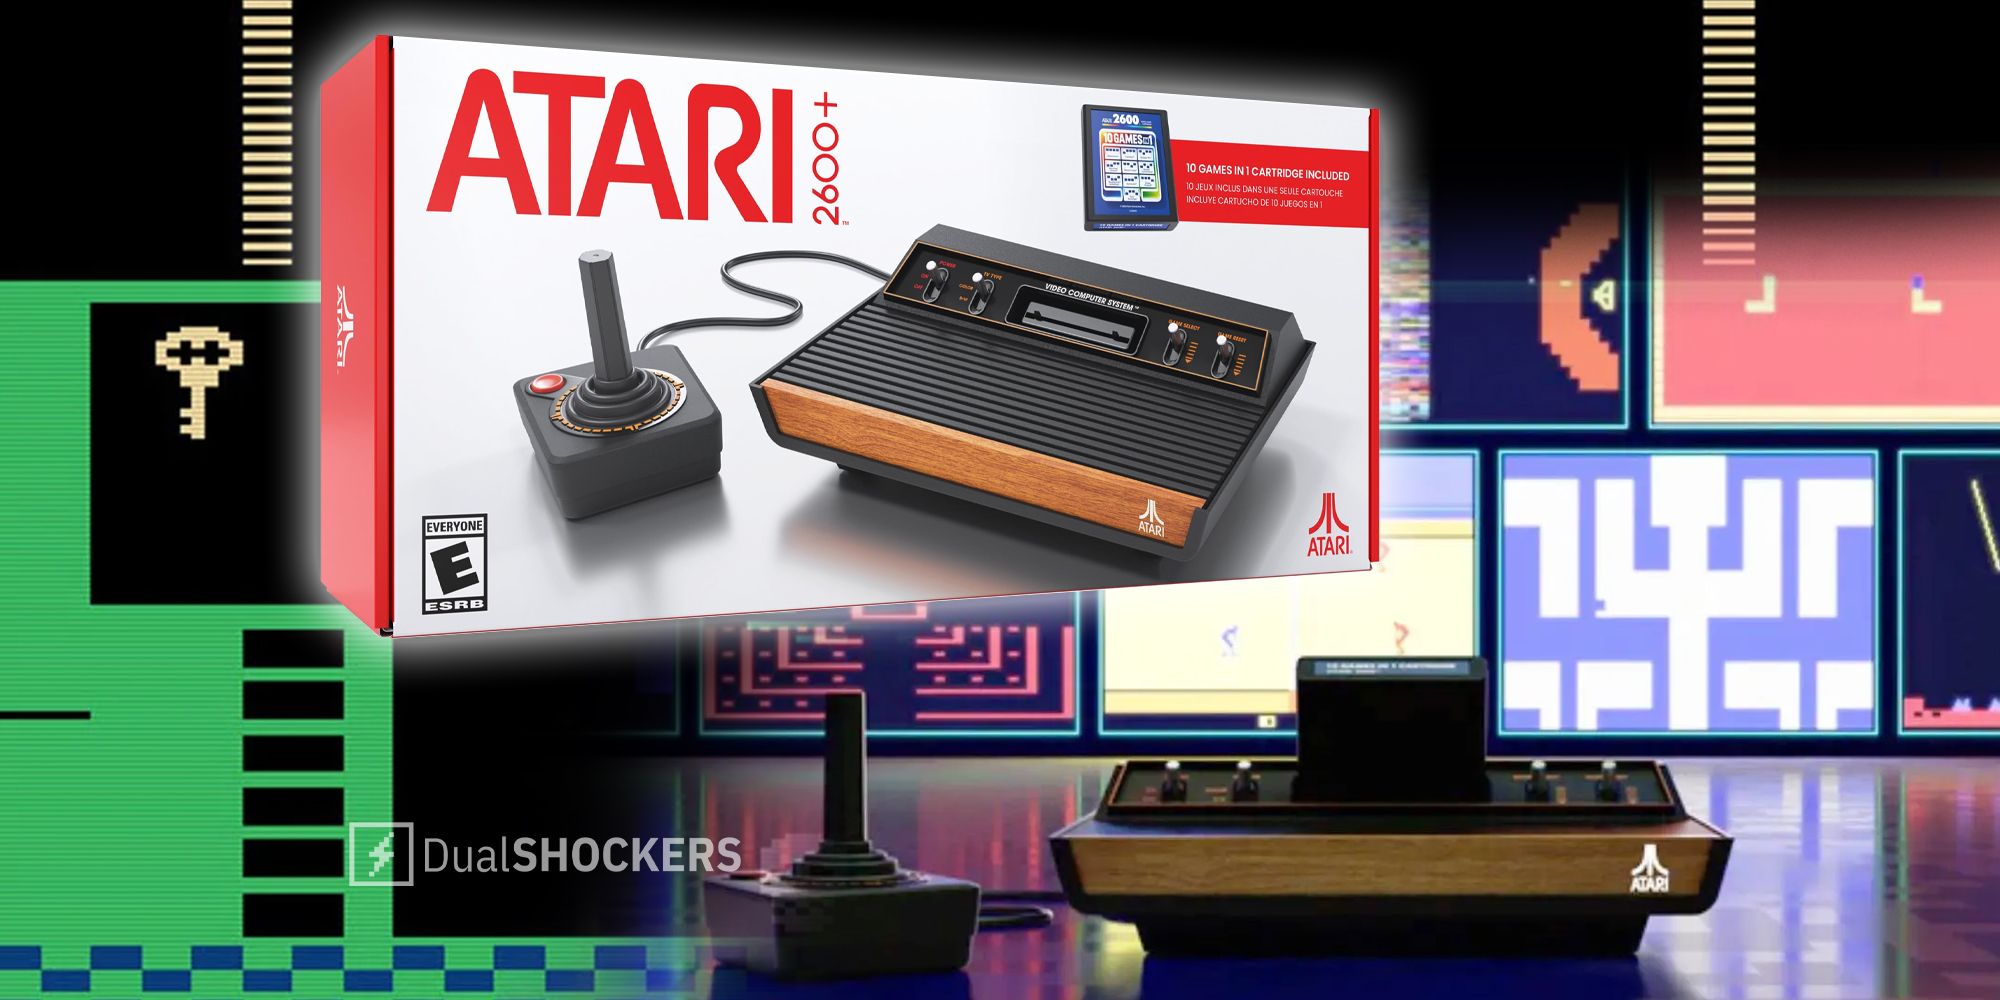 This retro gaming console plays both Atari 2600 and 7800 cartridges